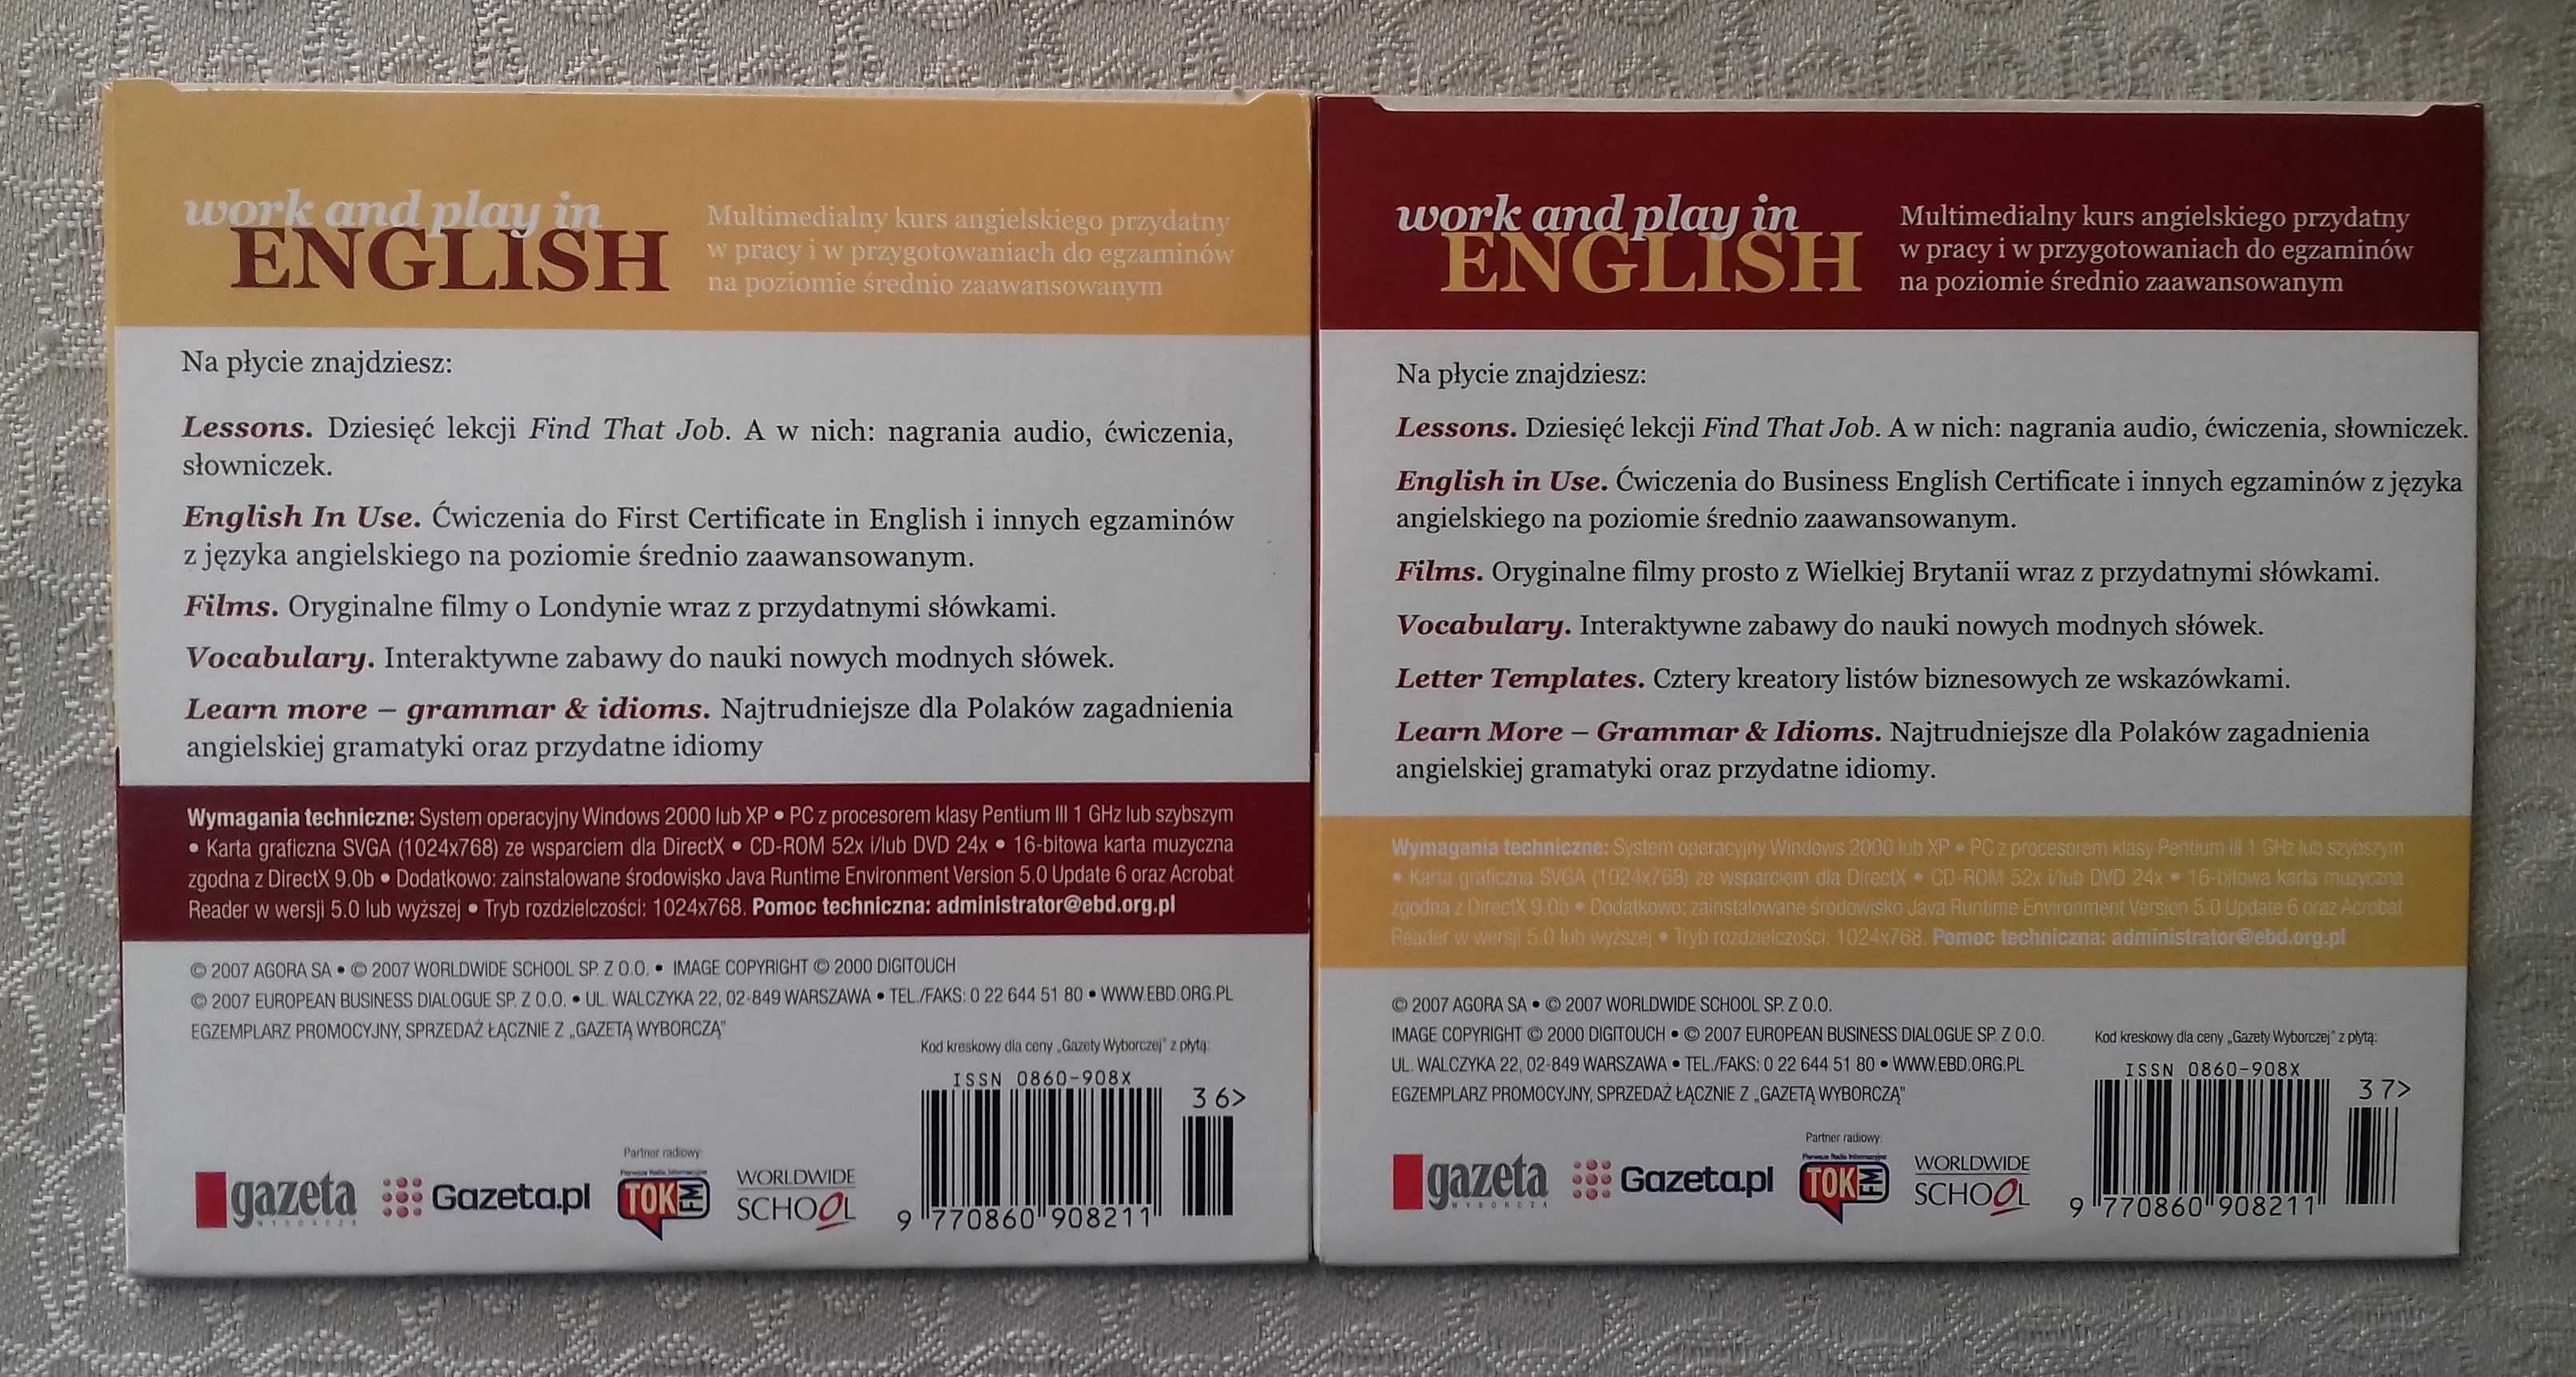 Work and play in English Płyta CD 1 i 2